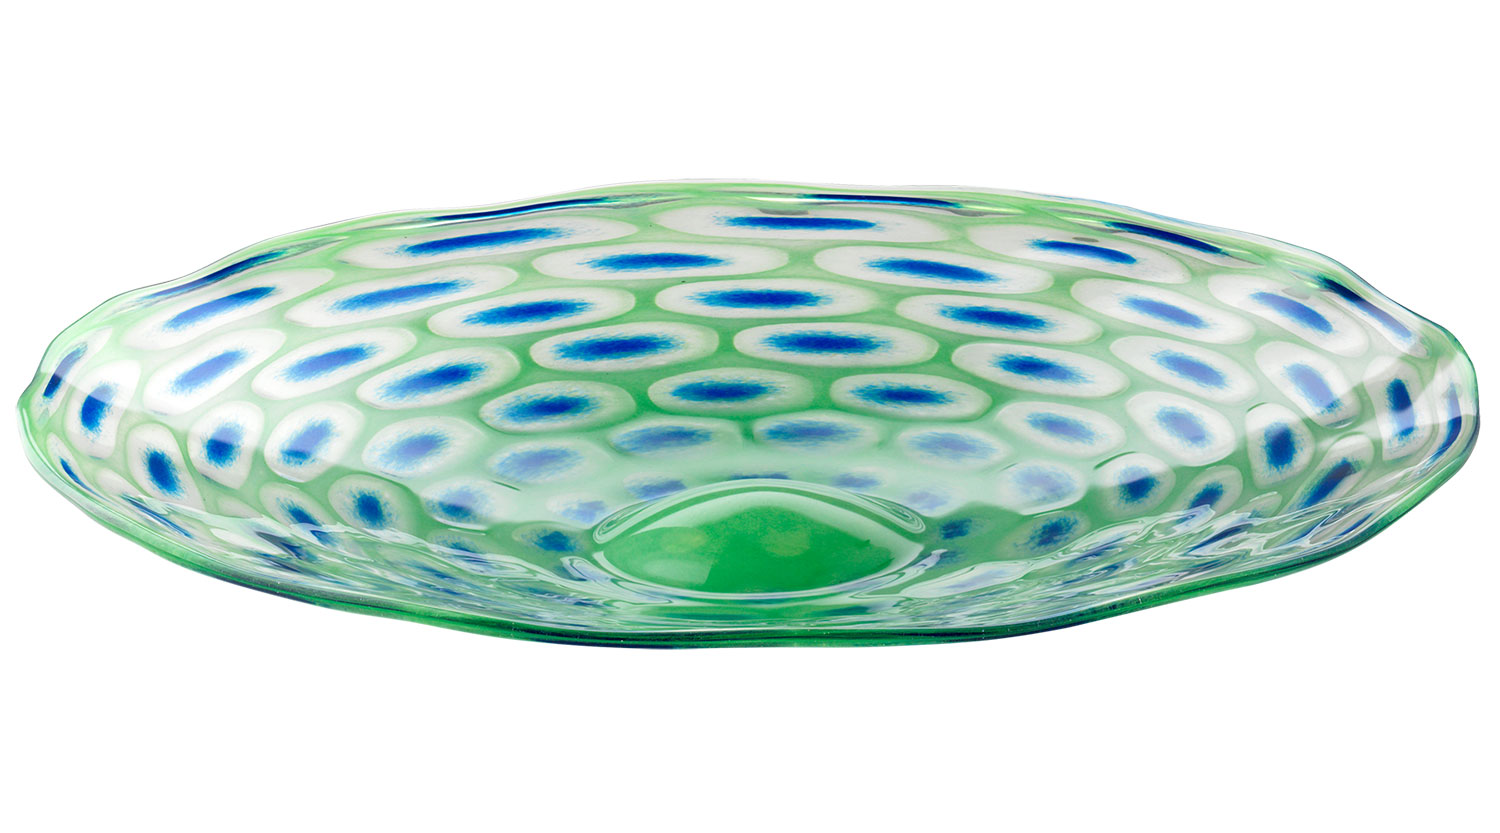 Glass bowl "Amalia" by Bernhard Schagemann